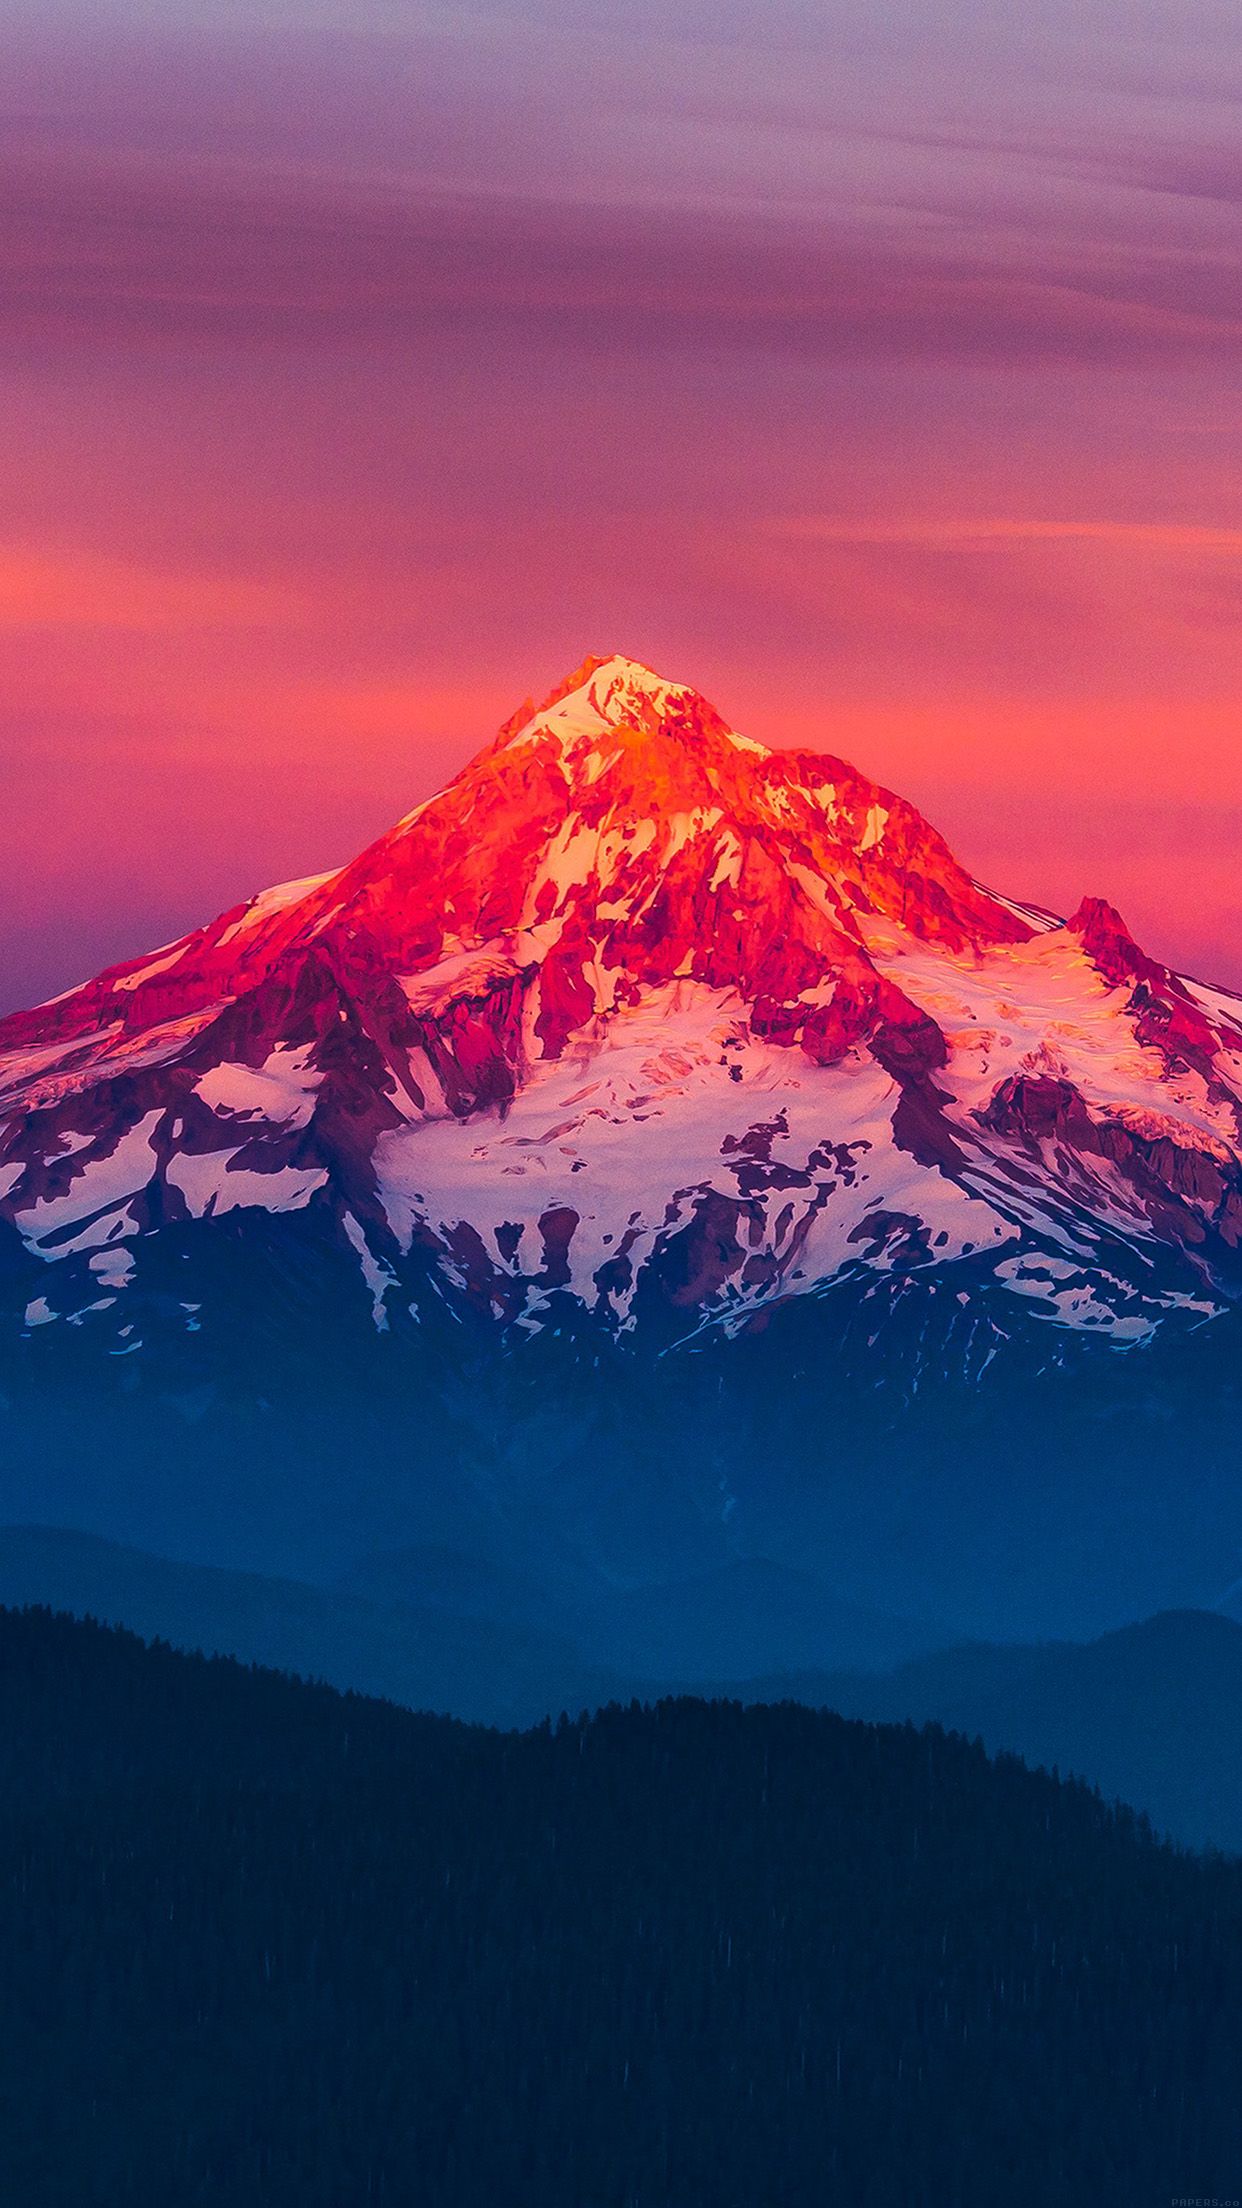 iPhone X wallpaper. purple sunset snow mountain nature